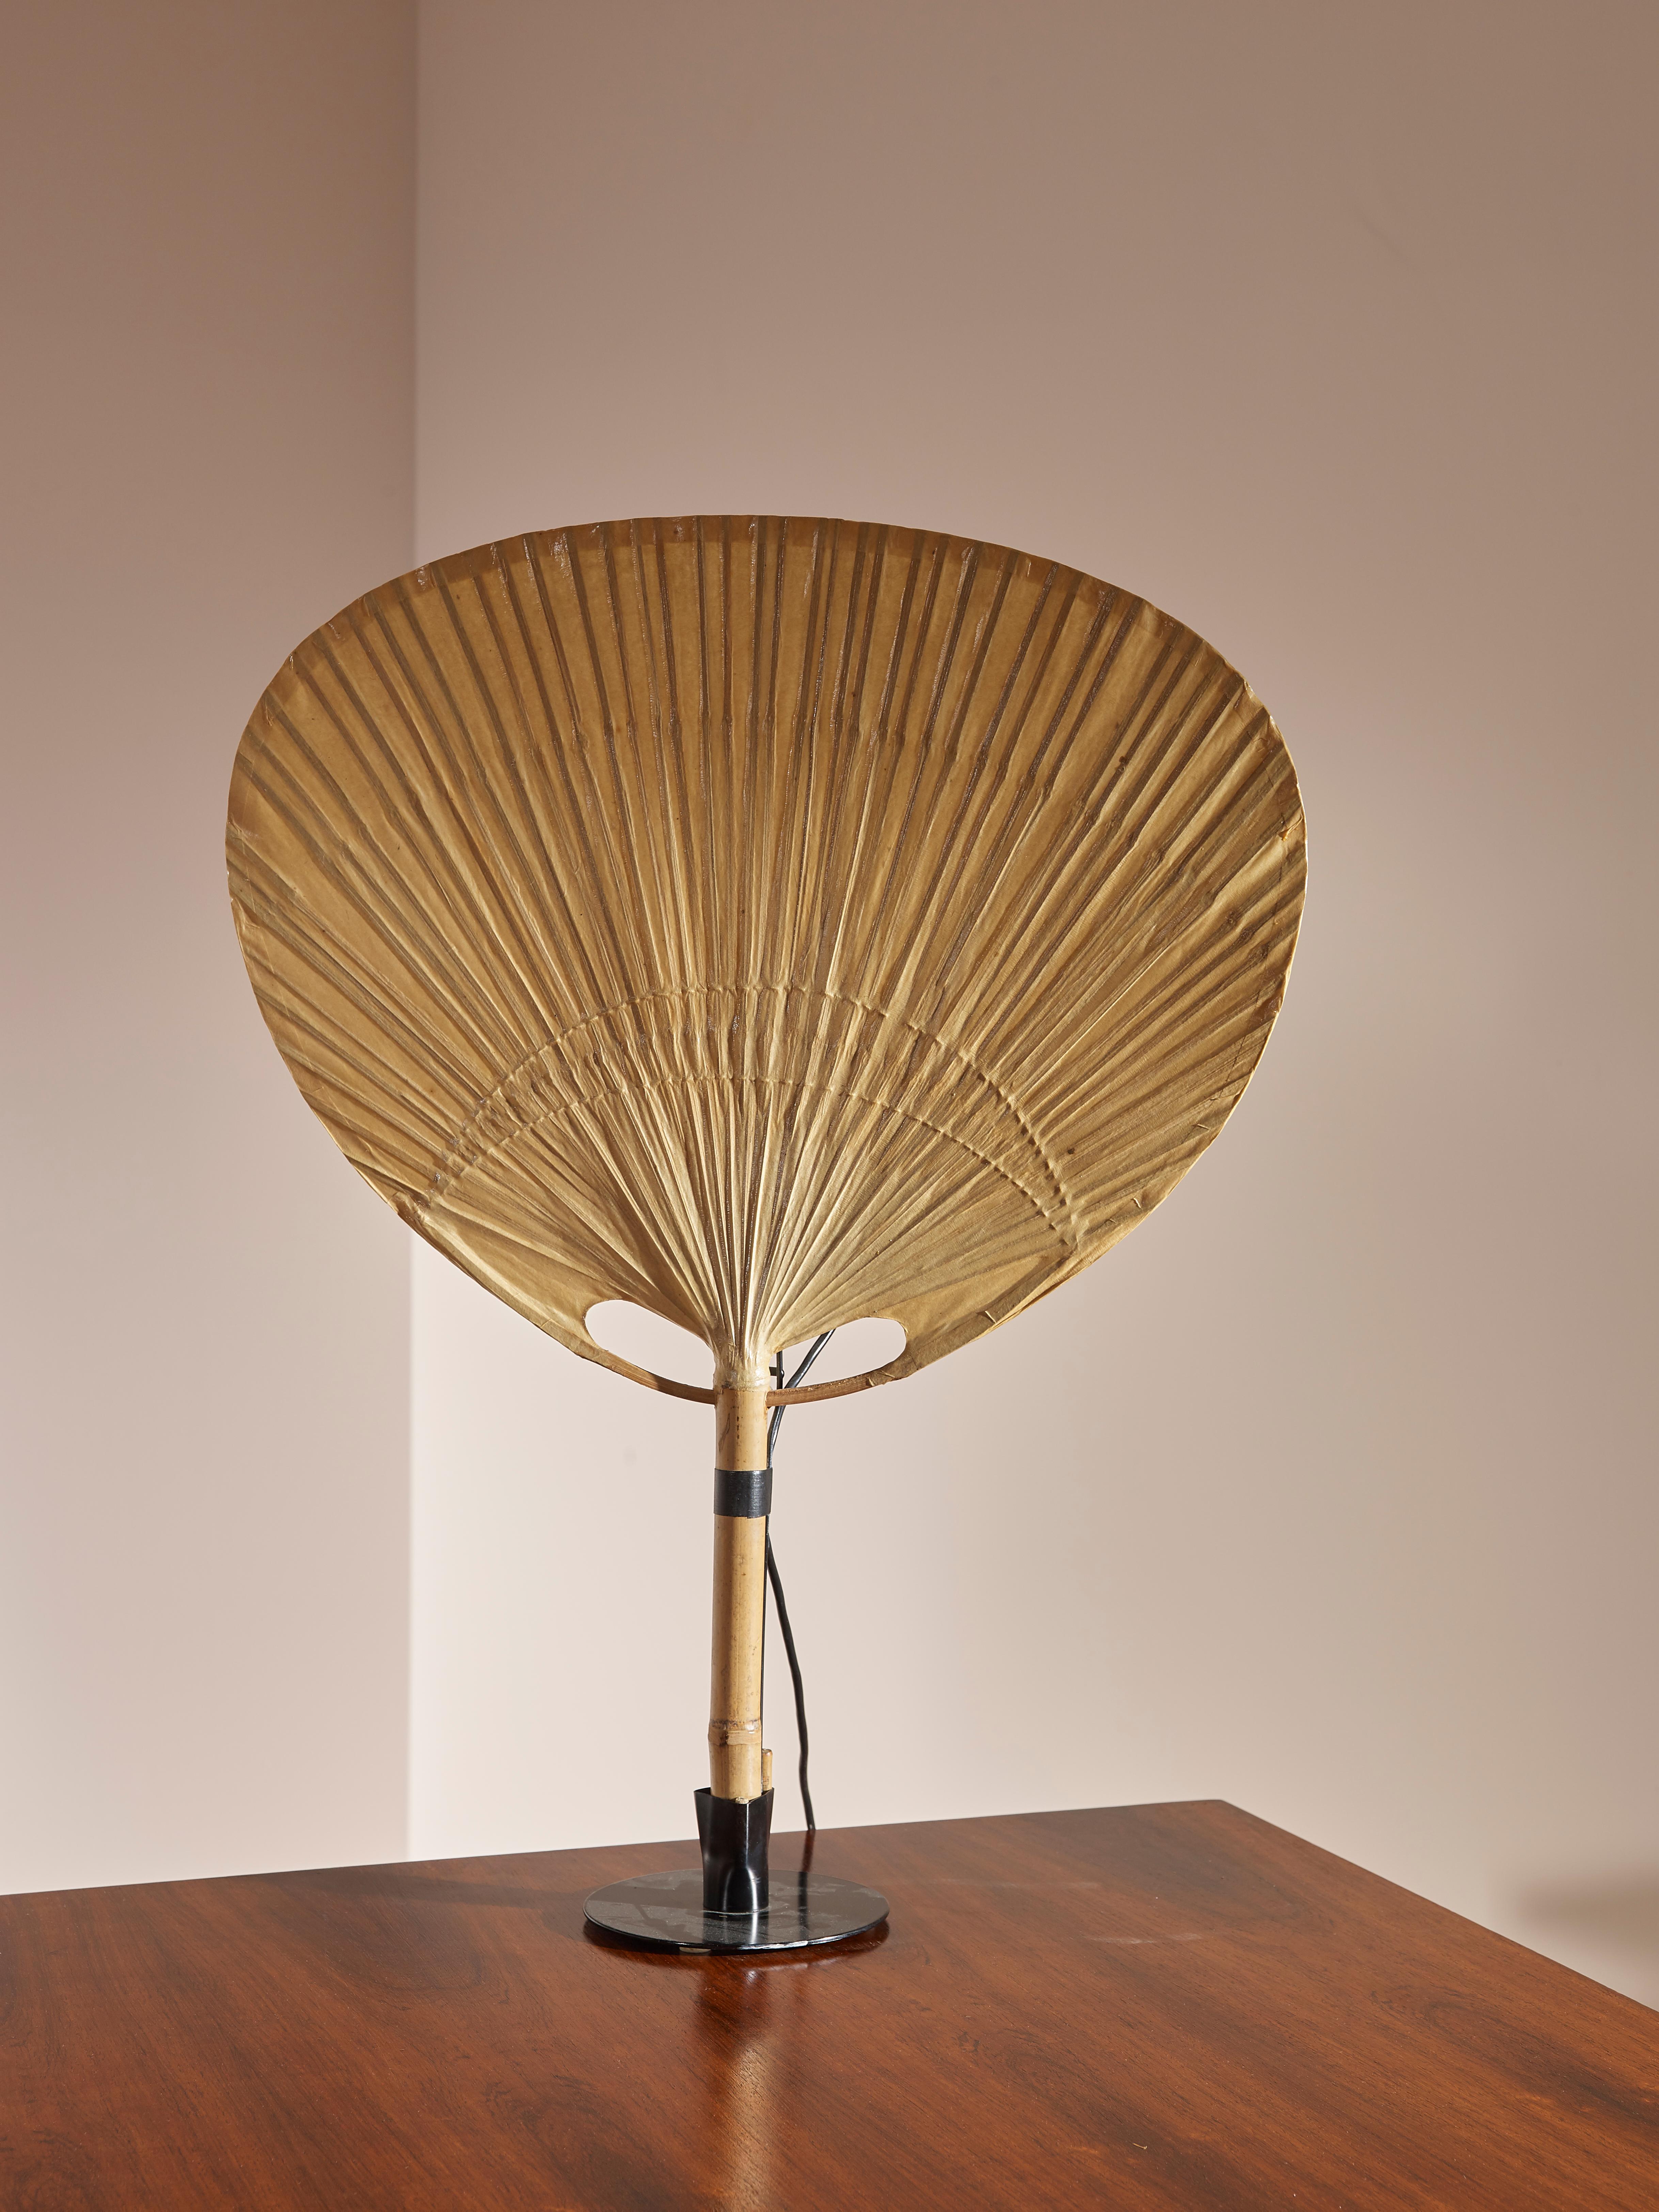 Japonisme ‘Uchiwa’ Table Lamp by Ingo Maurer for M Design, Germany, 1977